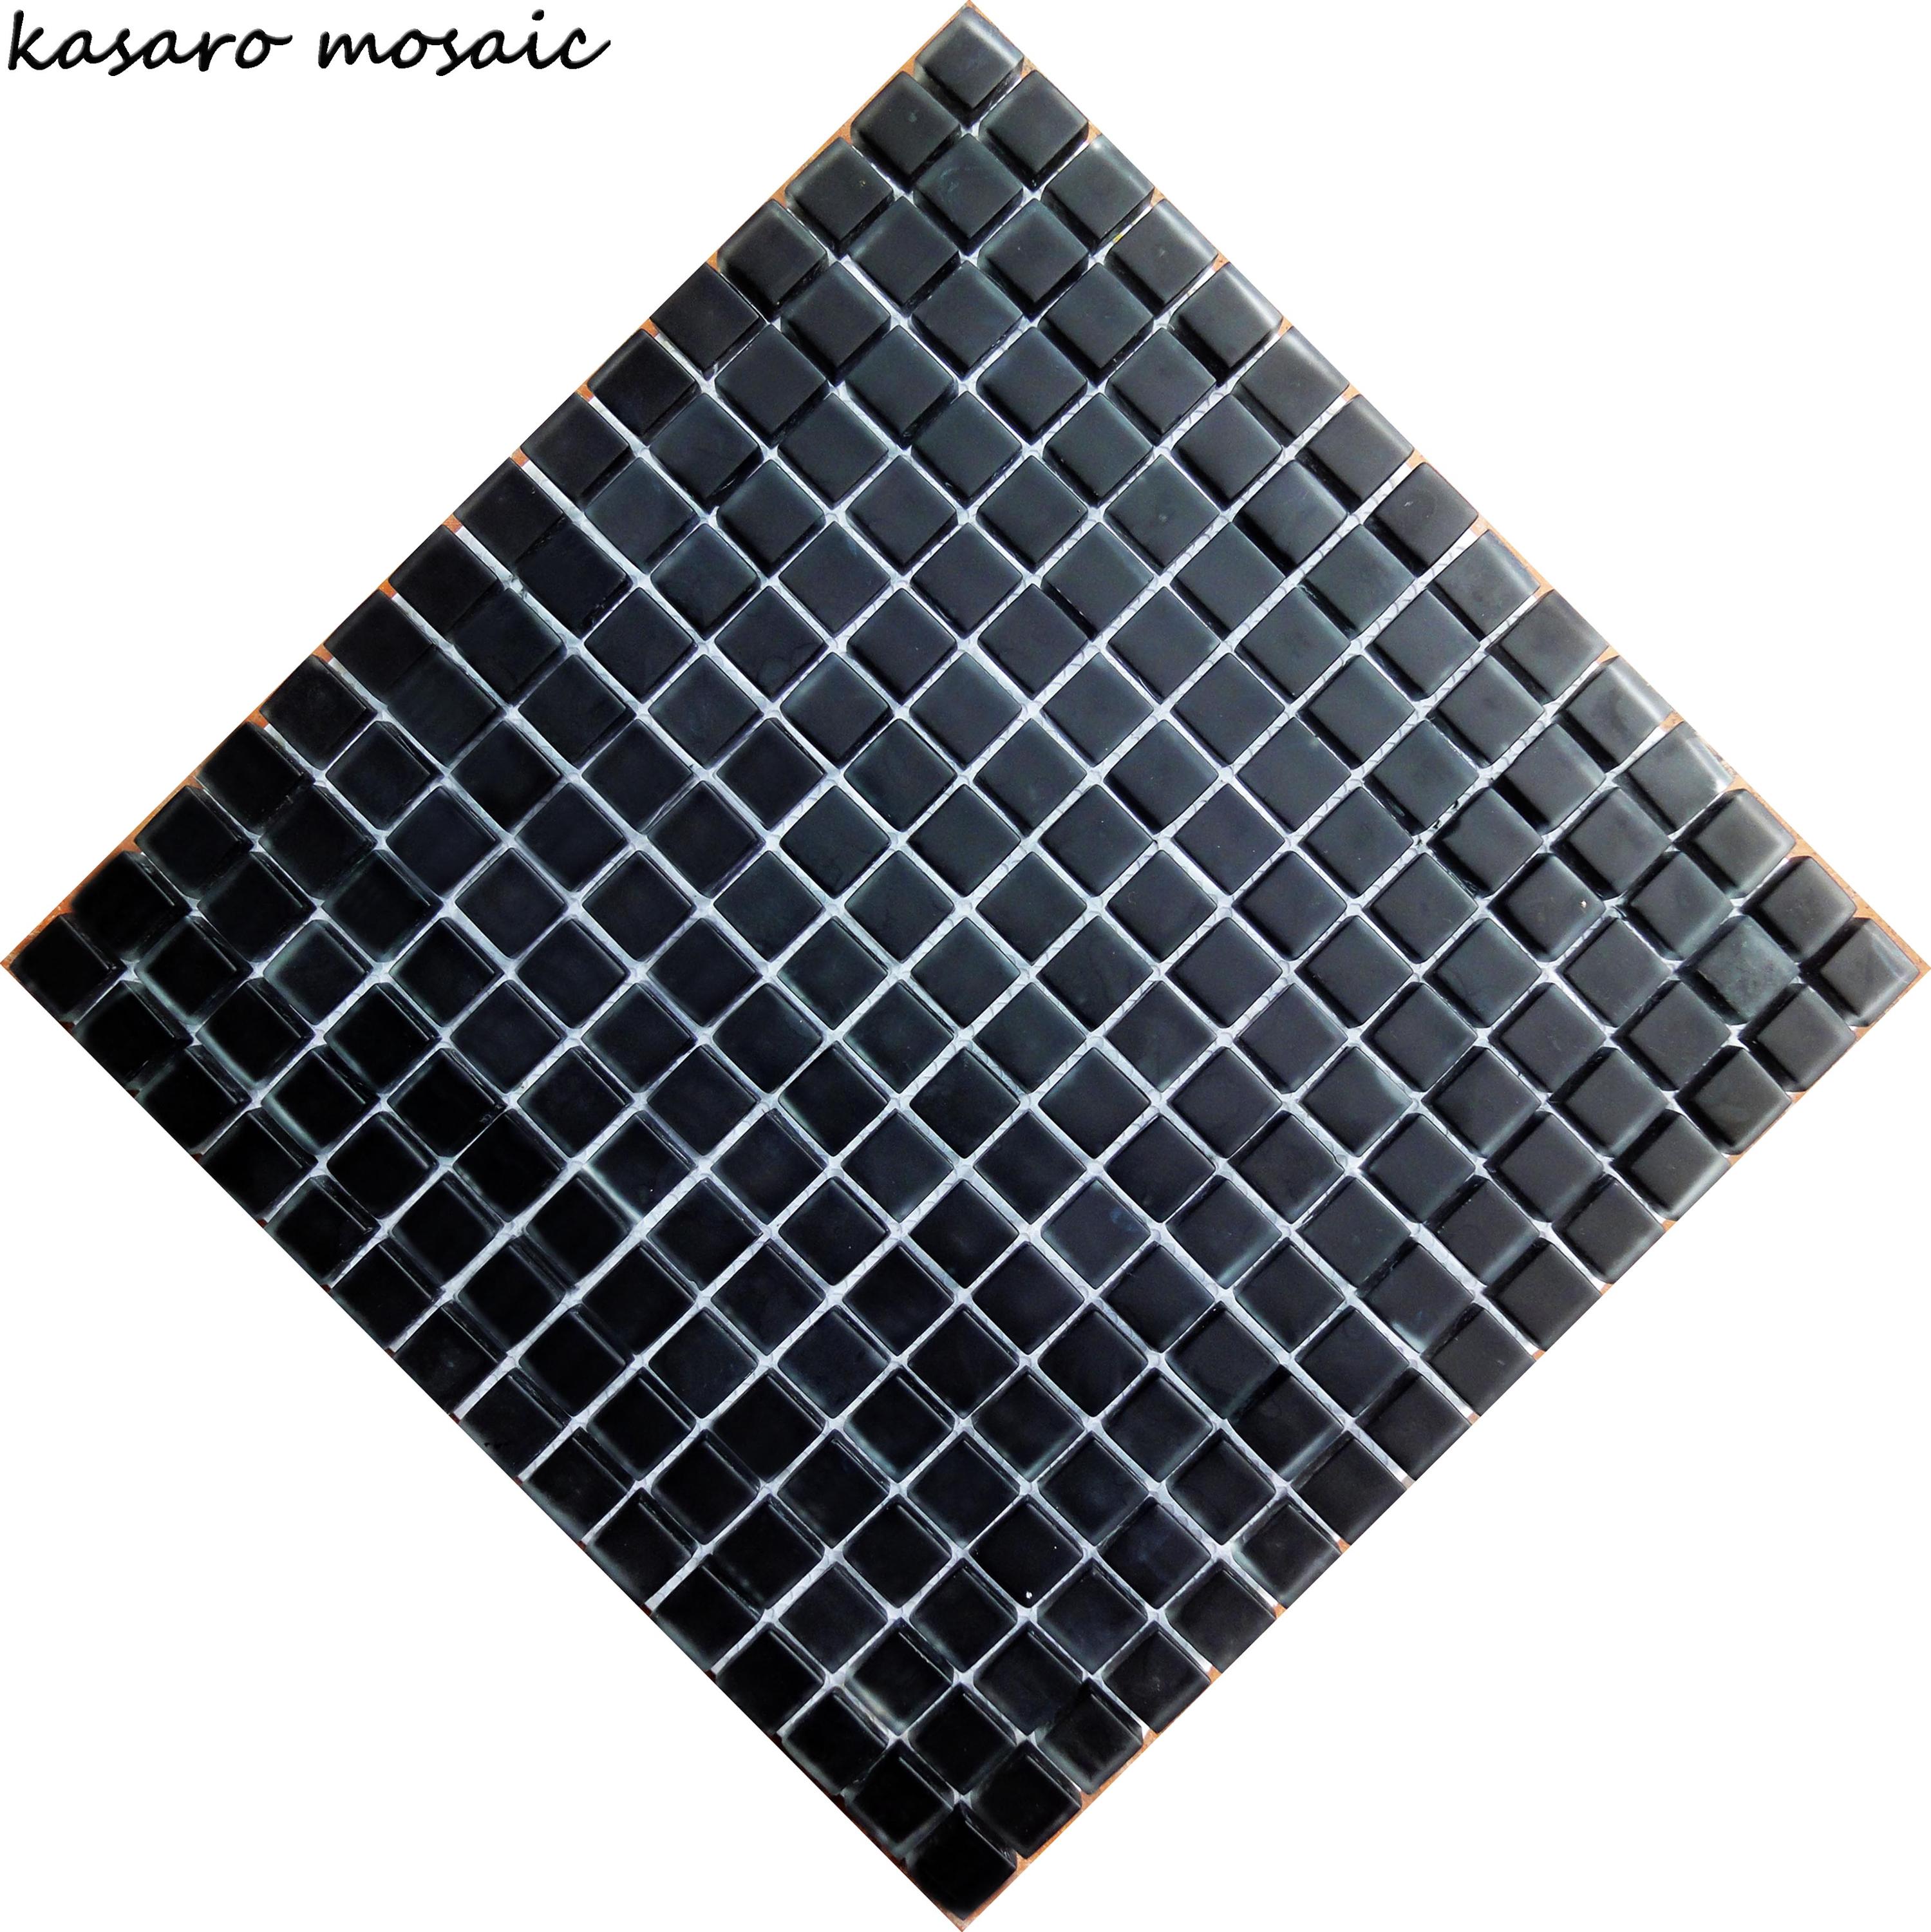 Crystal glass mosaic, black glass mosaic tile